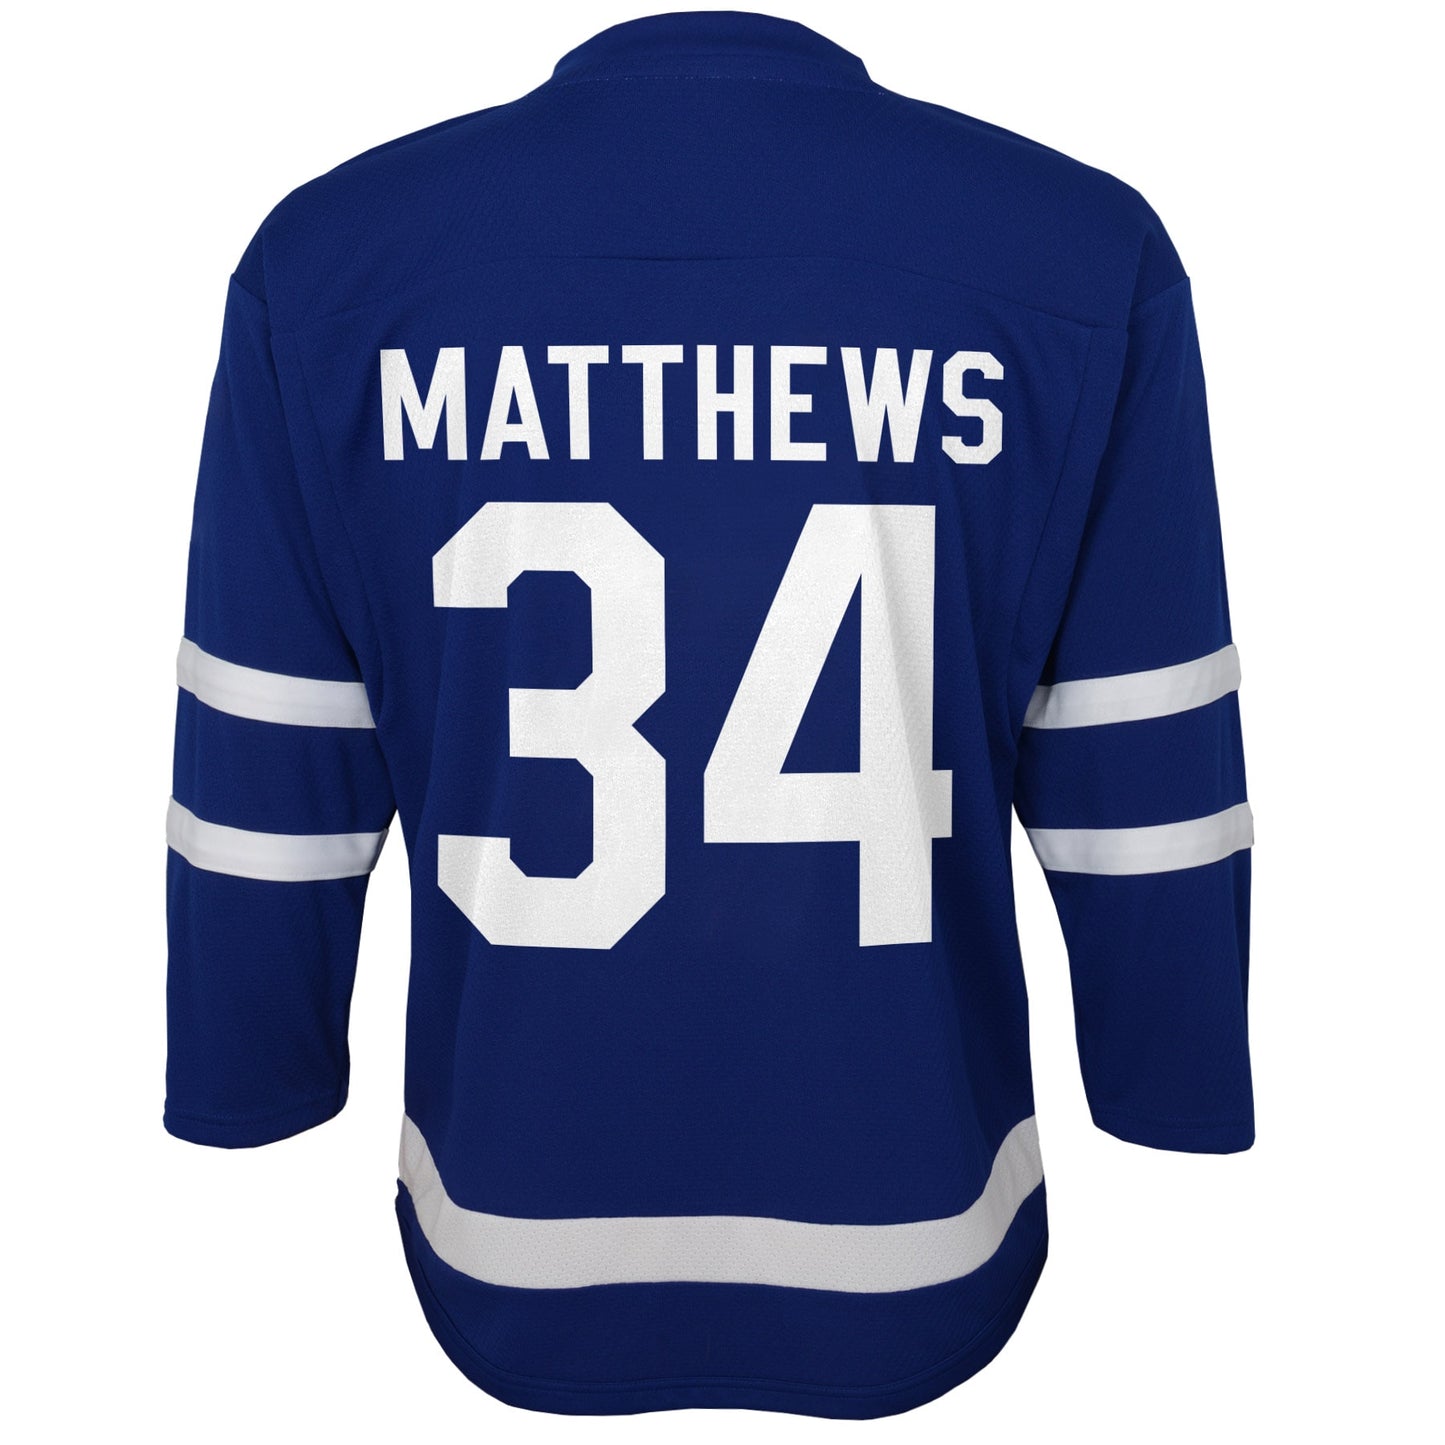 Auston Matthews Toronto Maple Leafs Toddler Replica Player Jersey - Royal